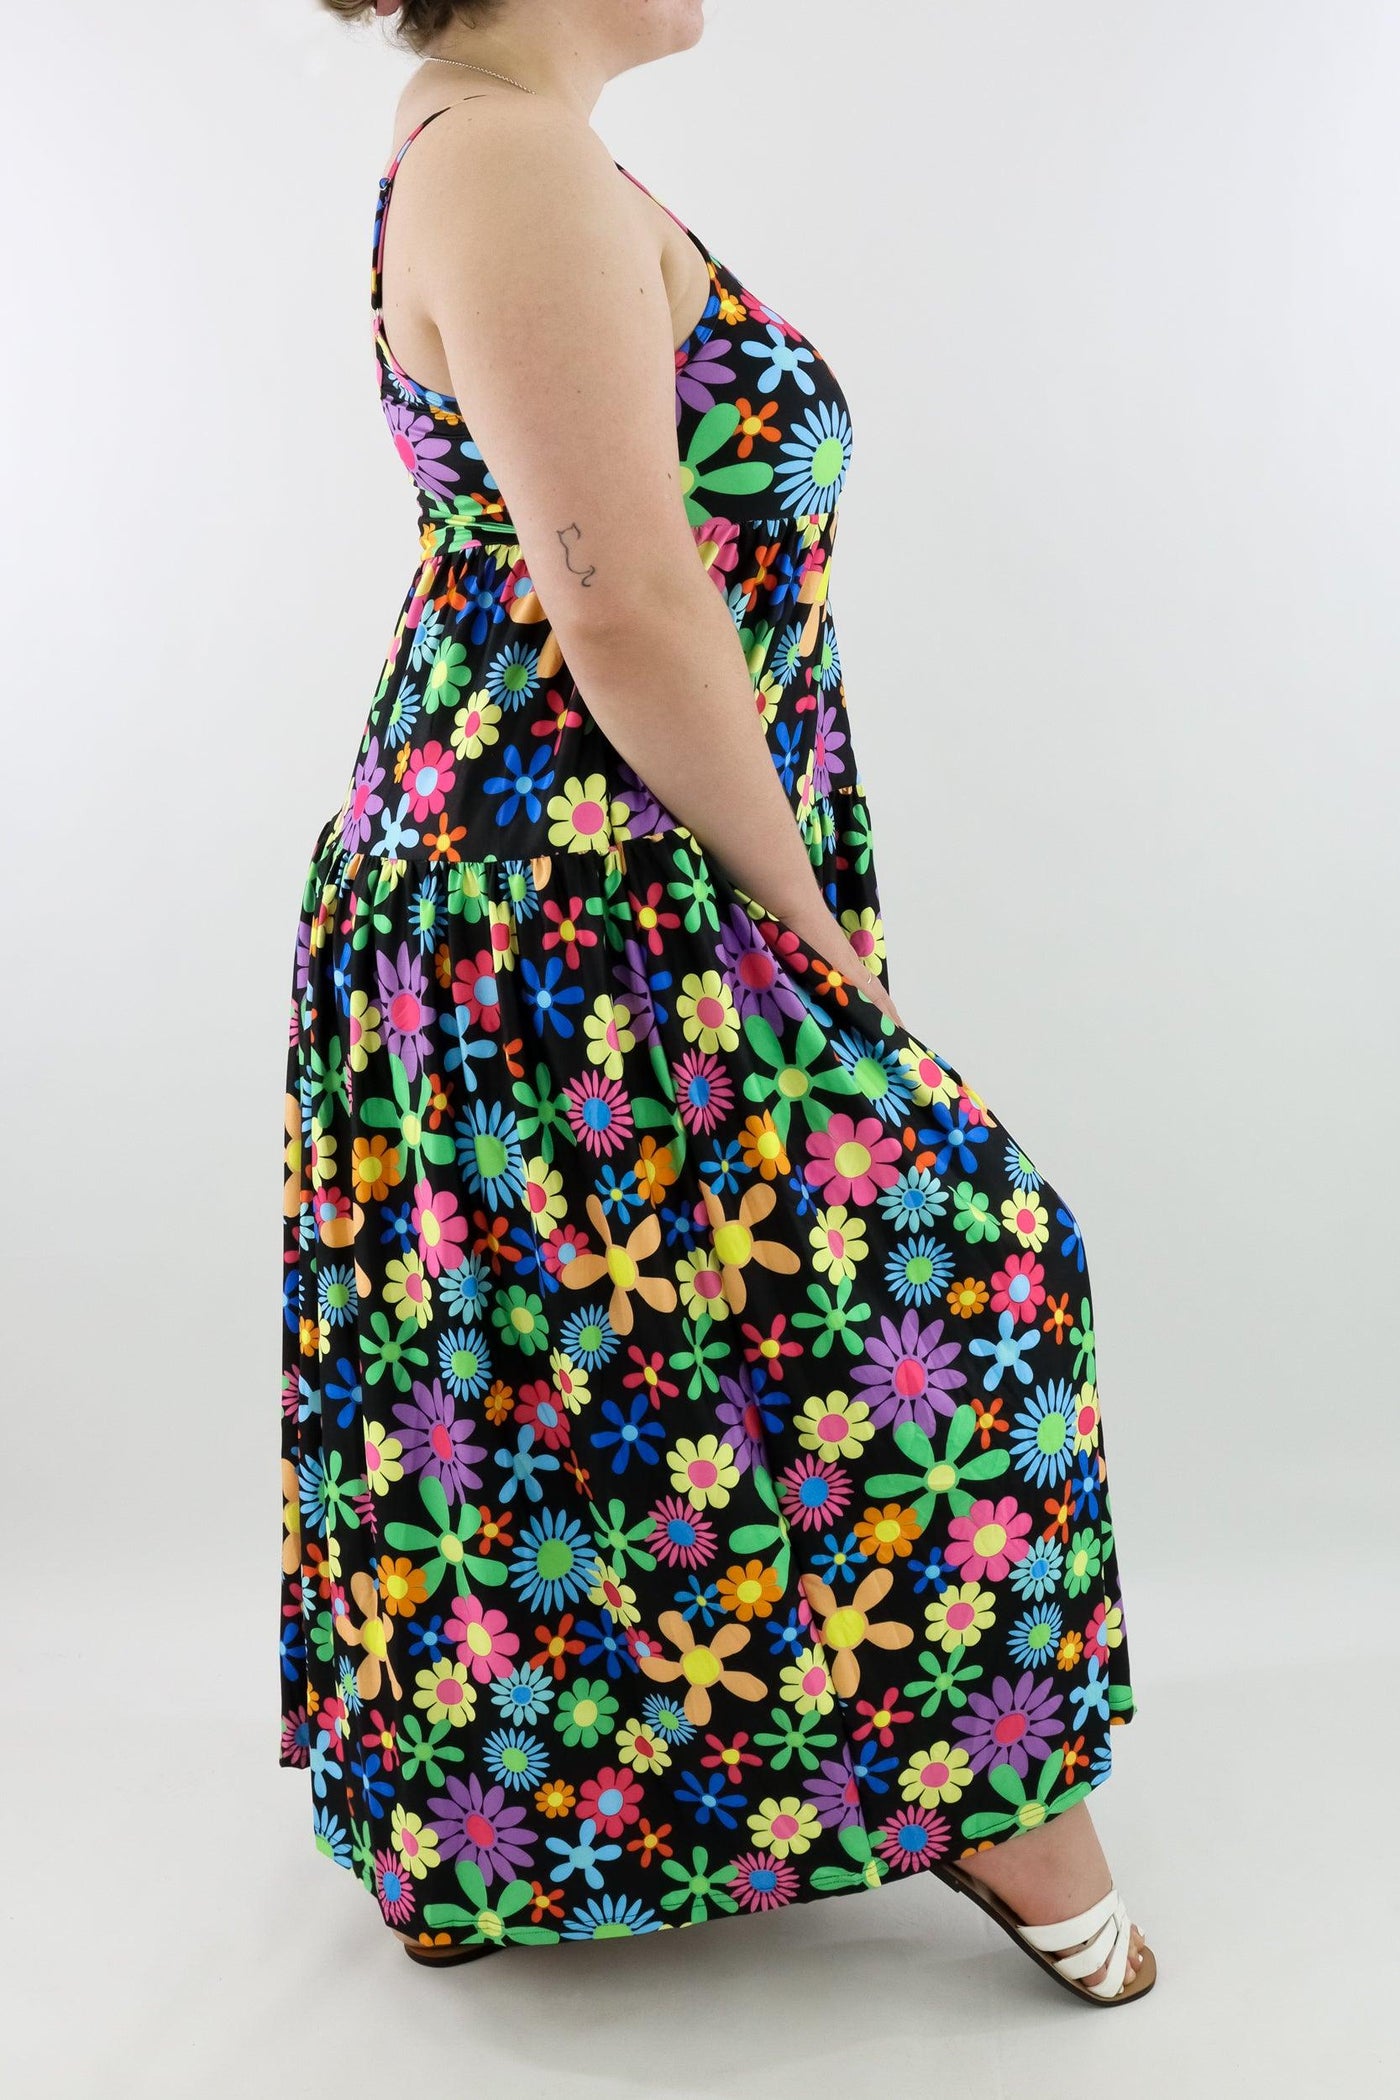 Flower Power - Strappy Maxi Dress - Pockets - Pawlie